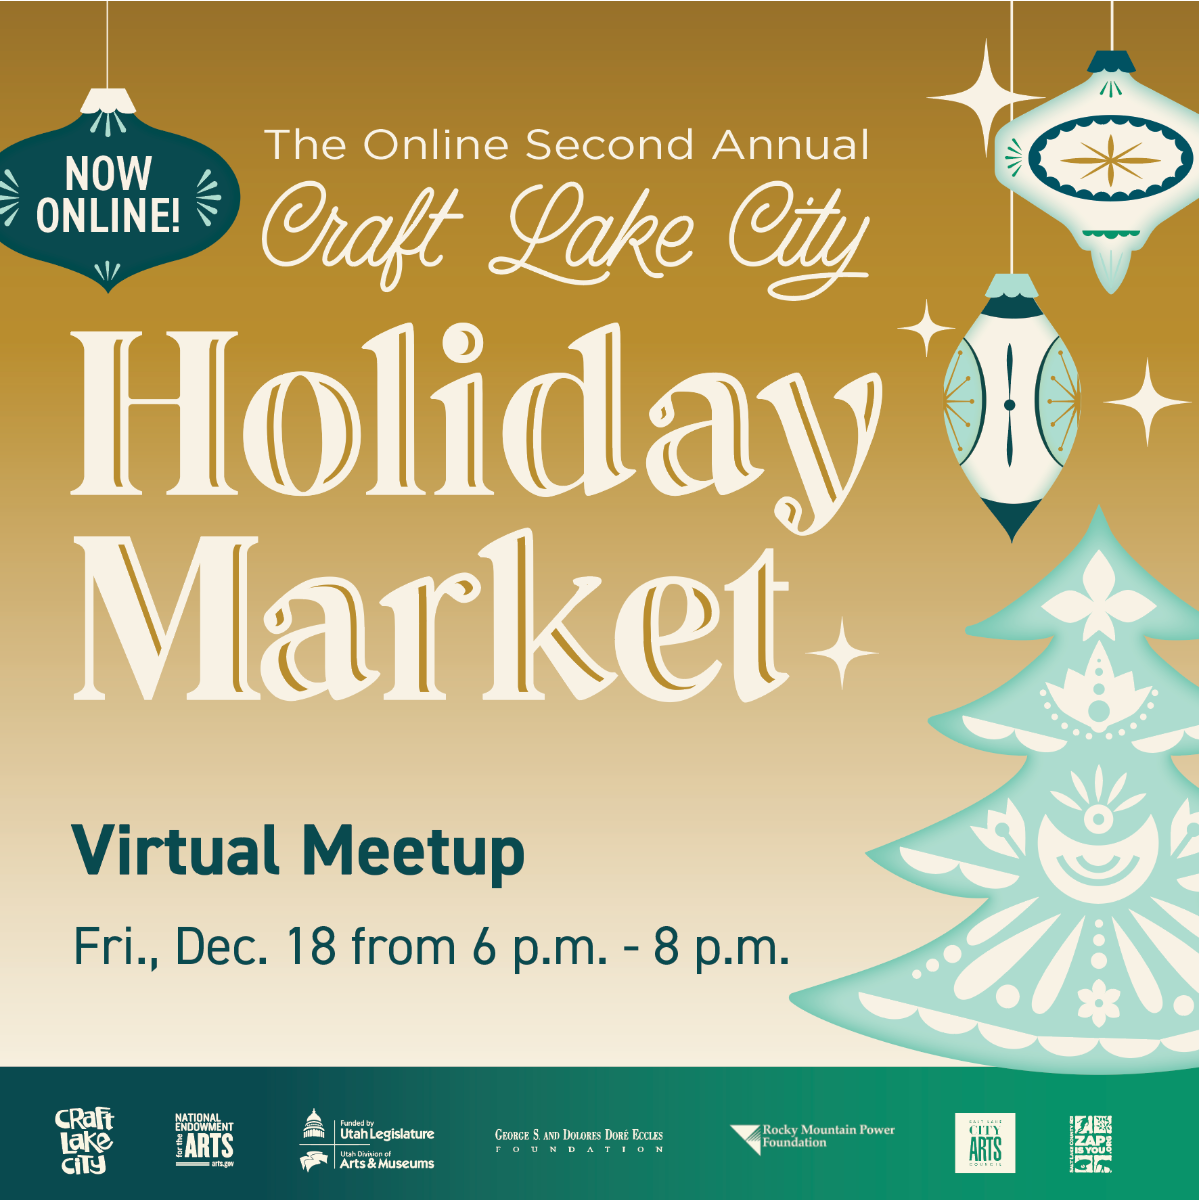 The FINAL Virtual Meetup of the Season is Tonight, Fri., Dec. 18 at 6:00 p.m.